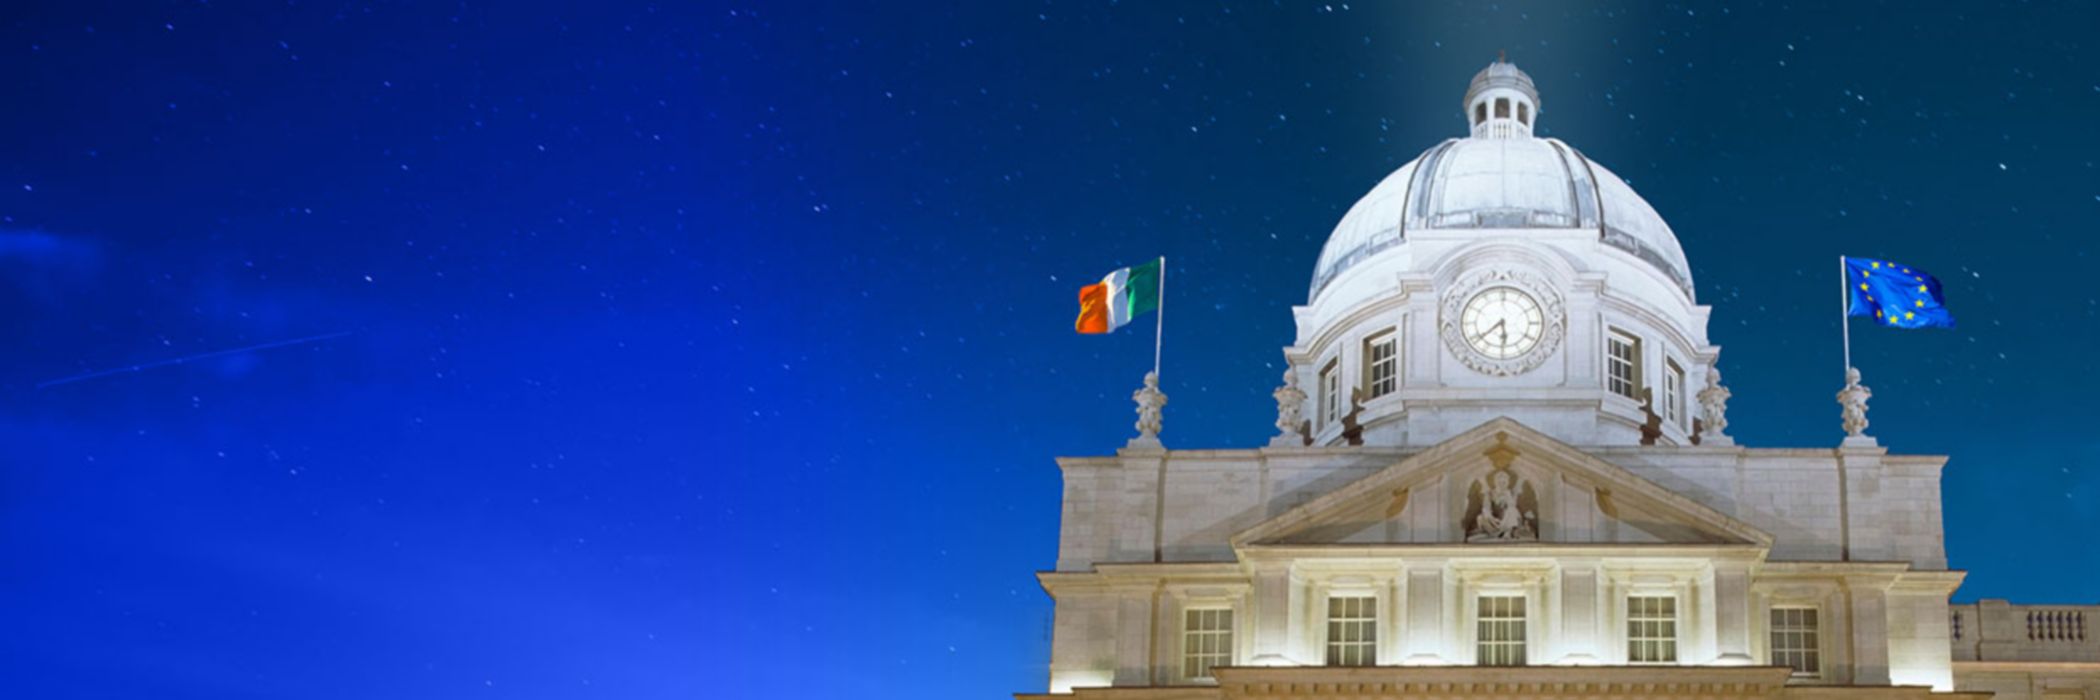 Irish government buildings